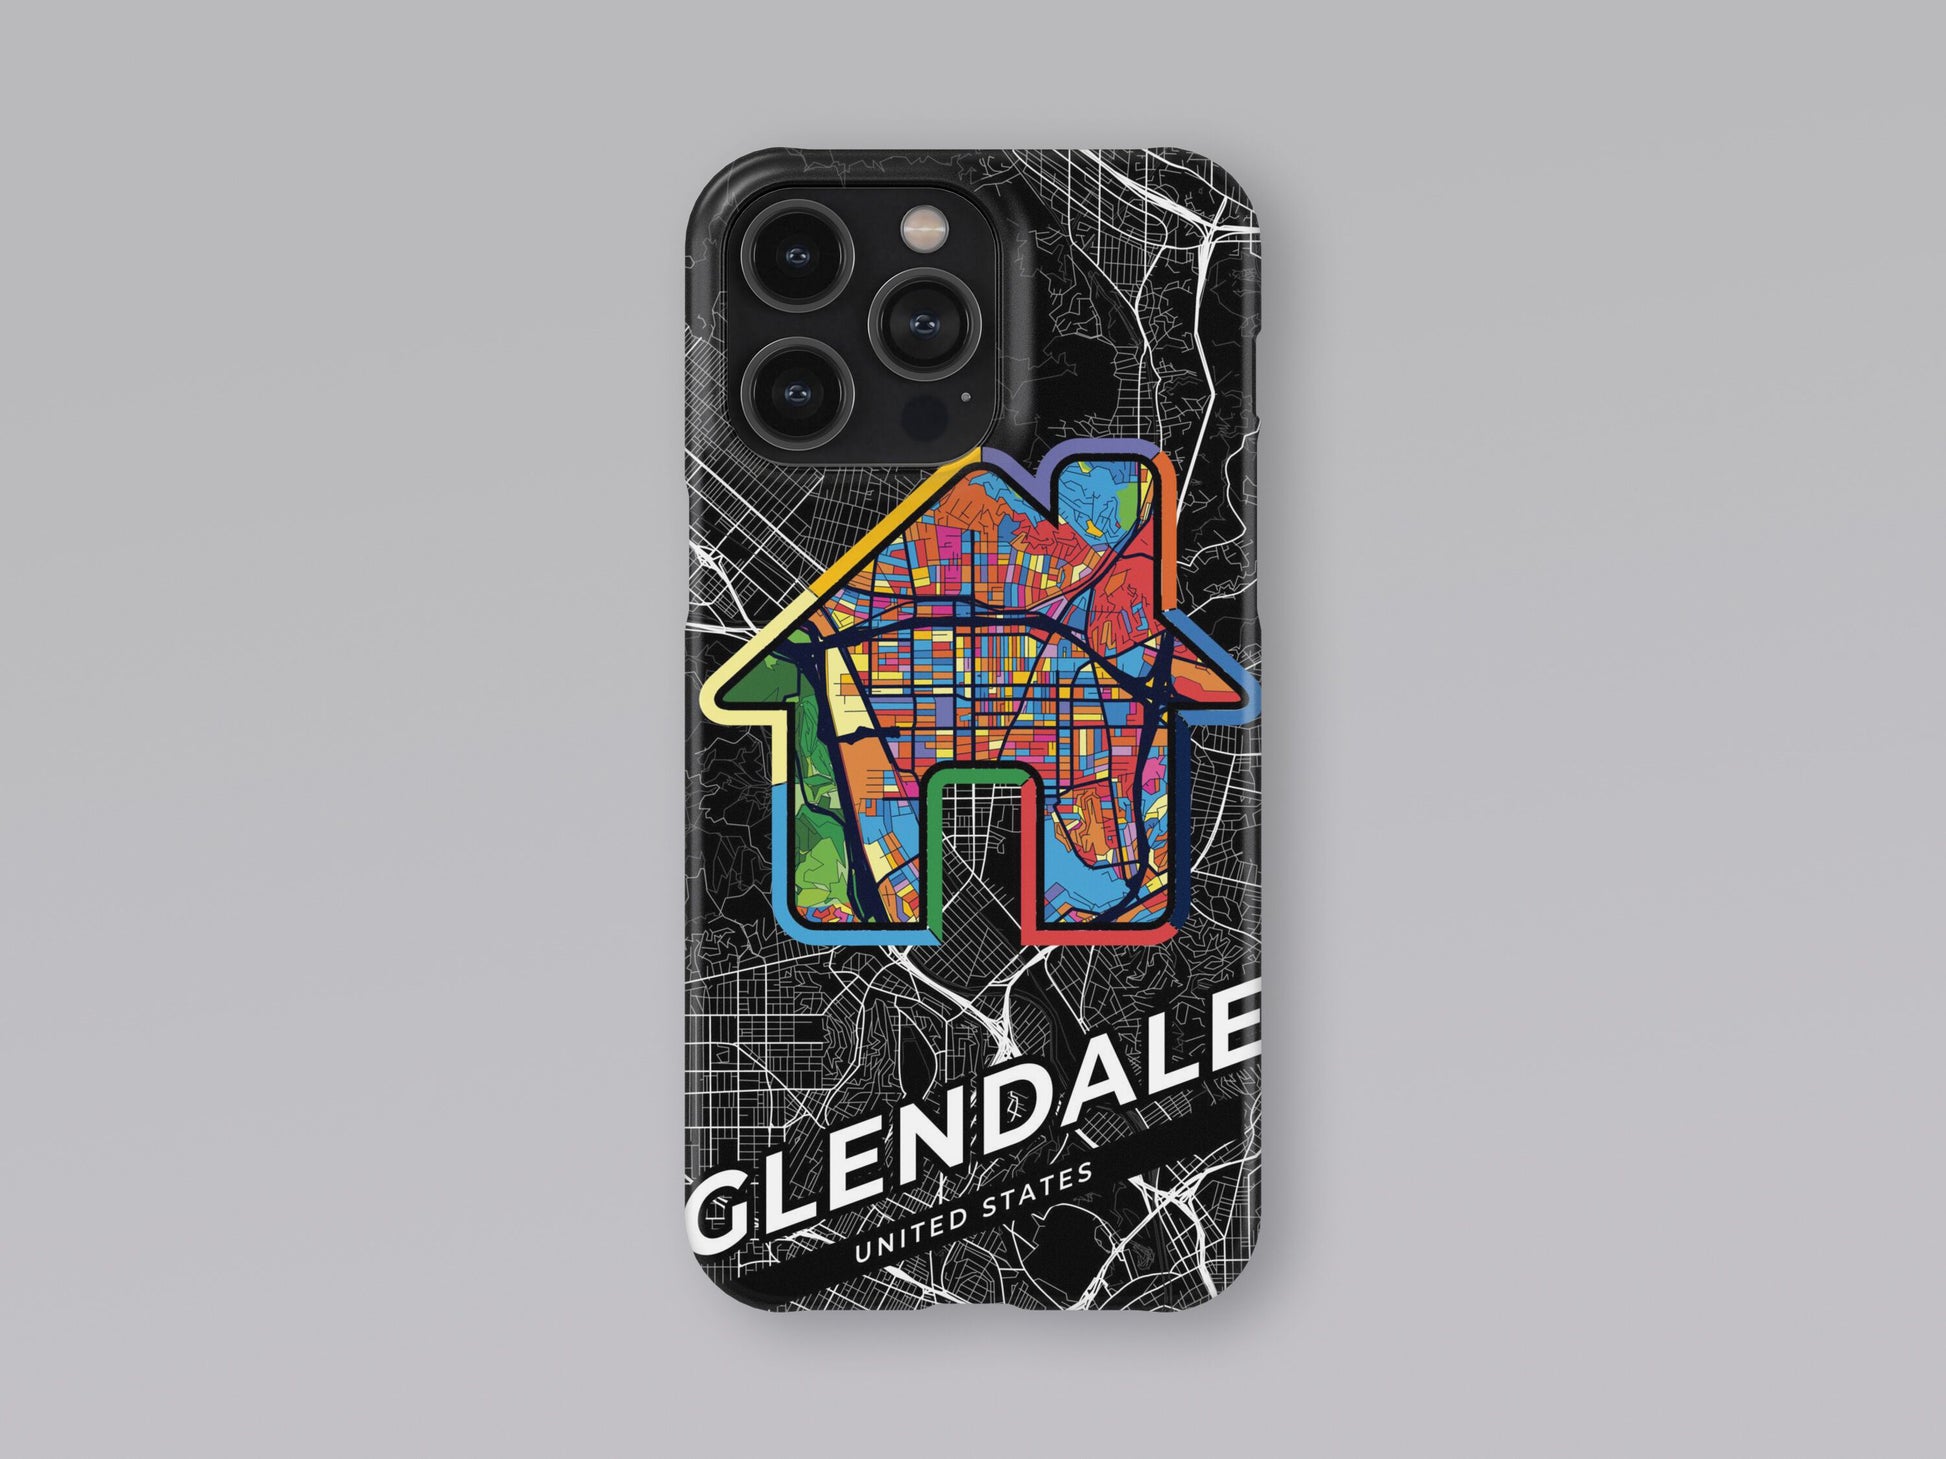 Glendale Arizona slim phone case with colorful icon. Birthday, wedding or housewarming gift. Couple match cases. 3